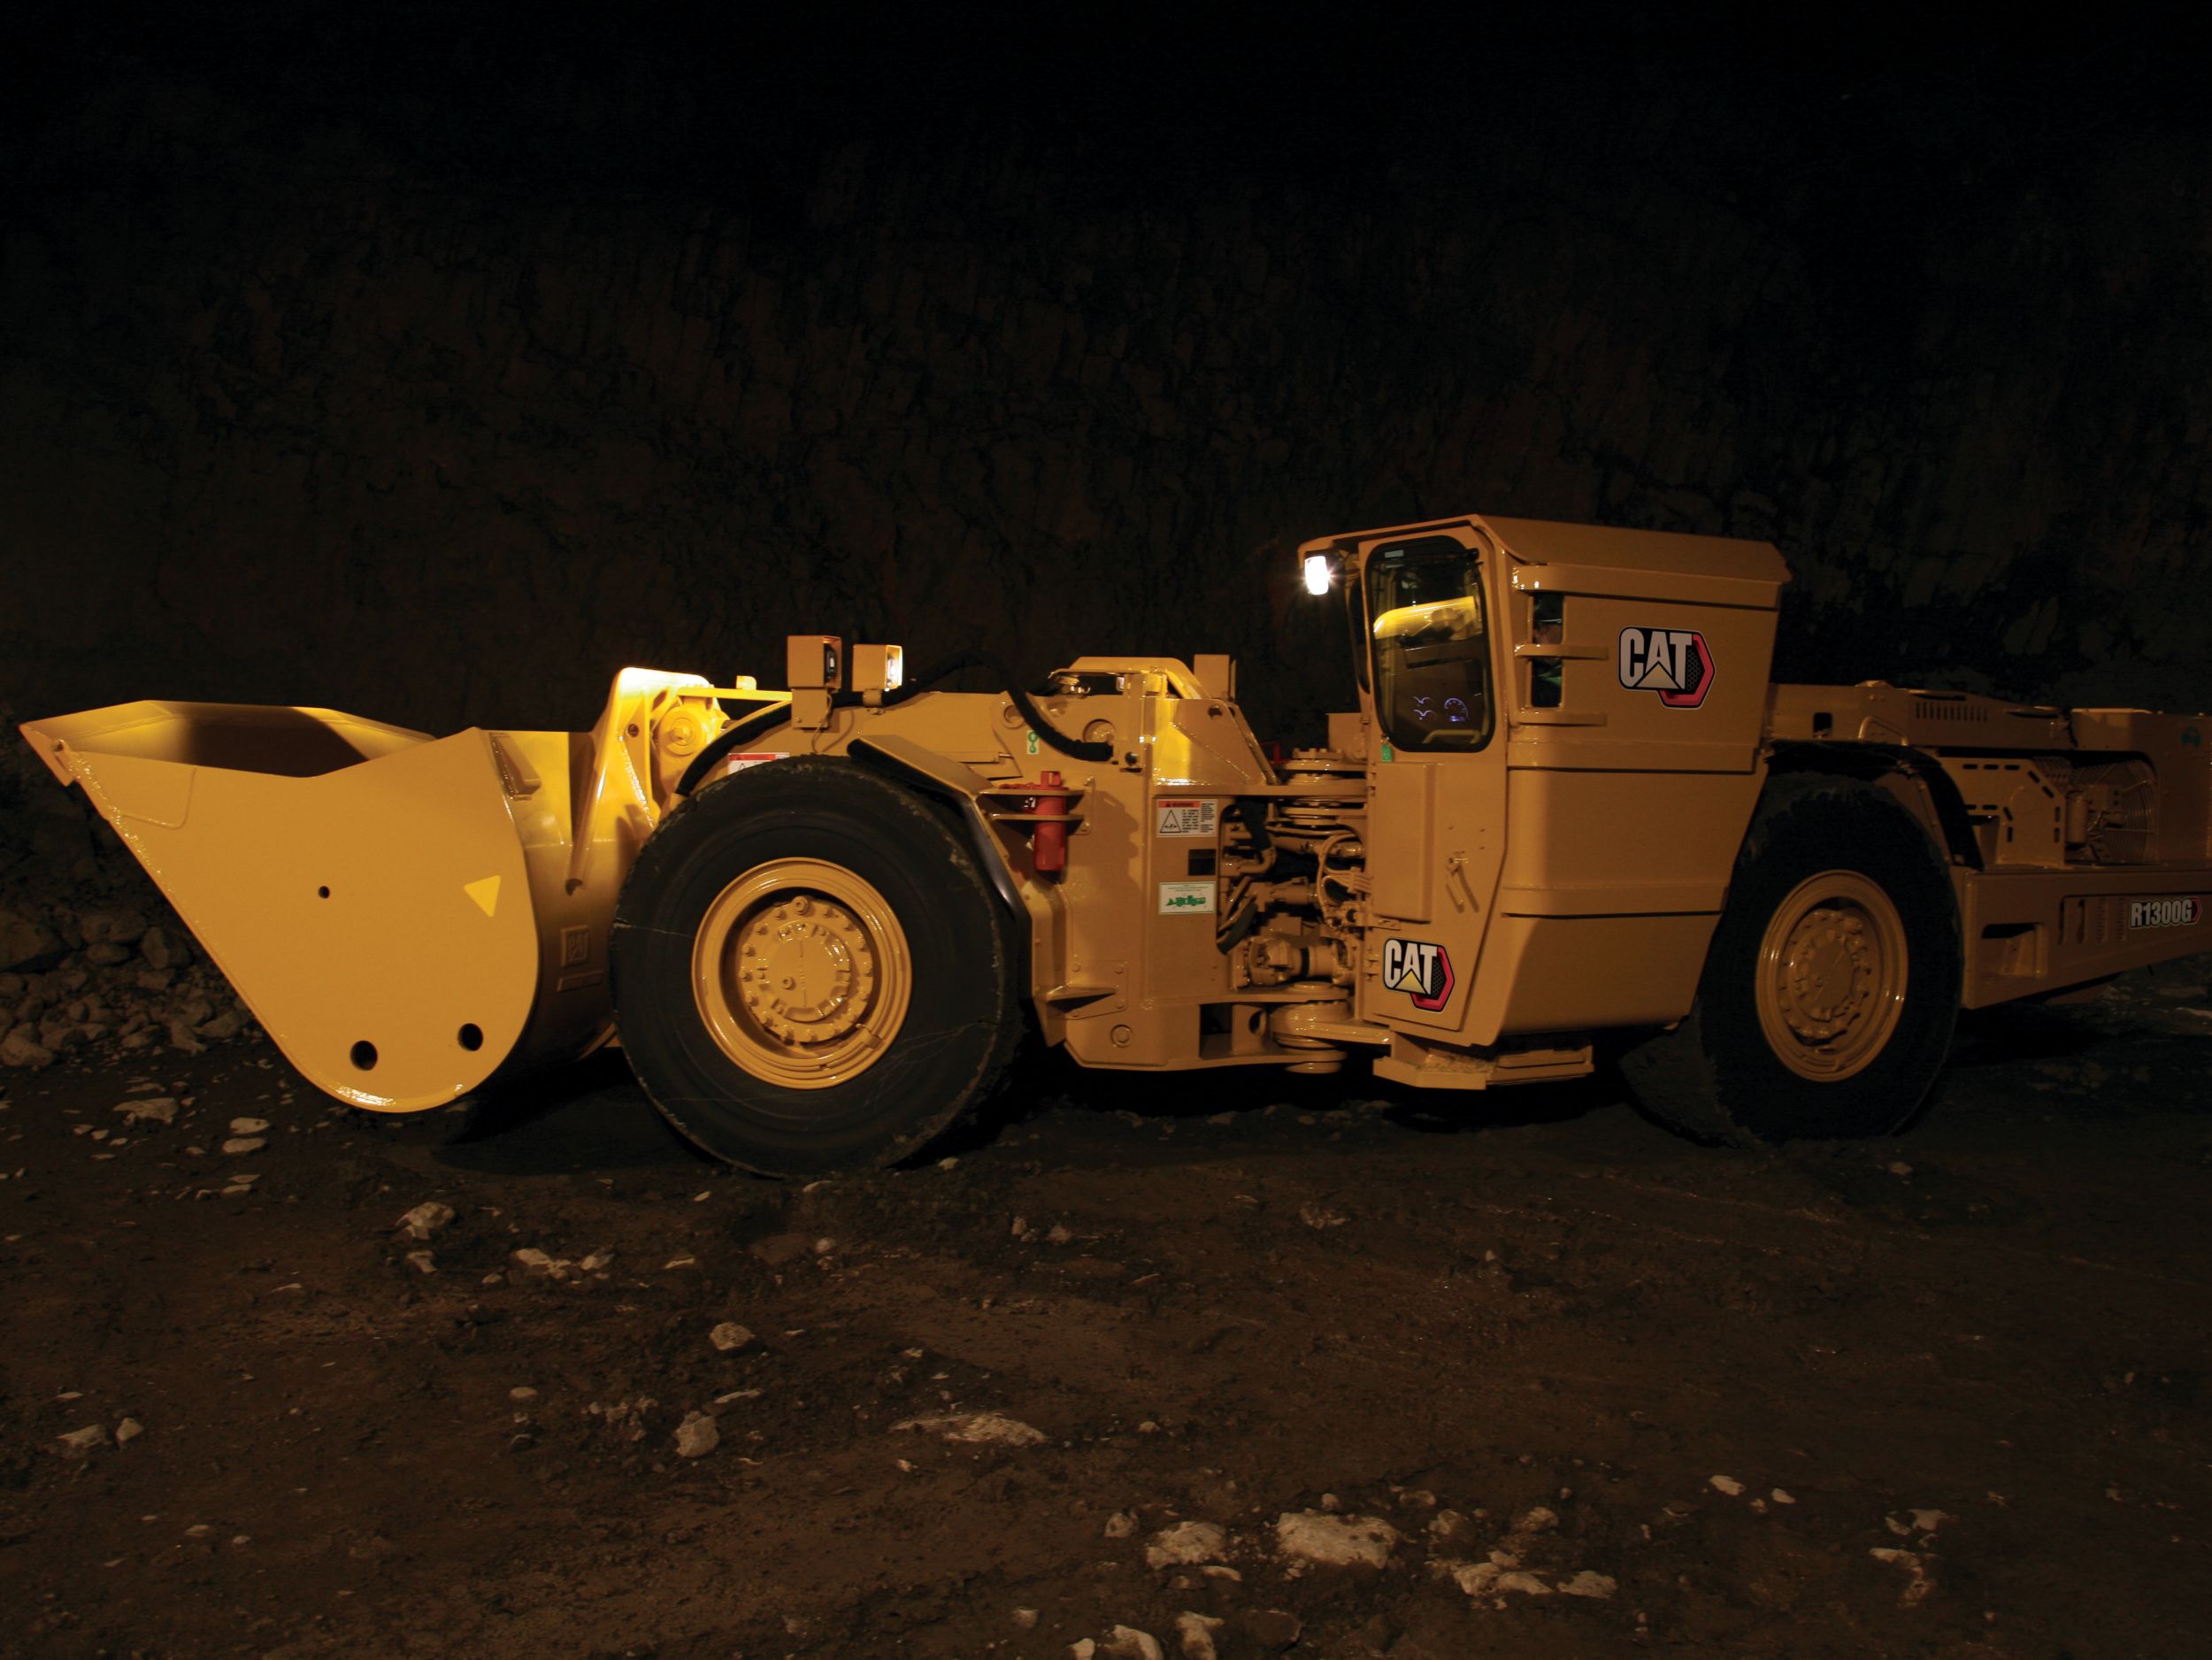 R1300G Underground Mining Load-Haul-Dump (LHD) Loaders>